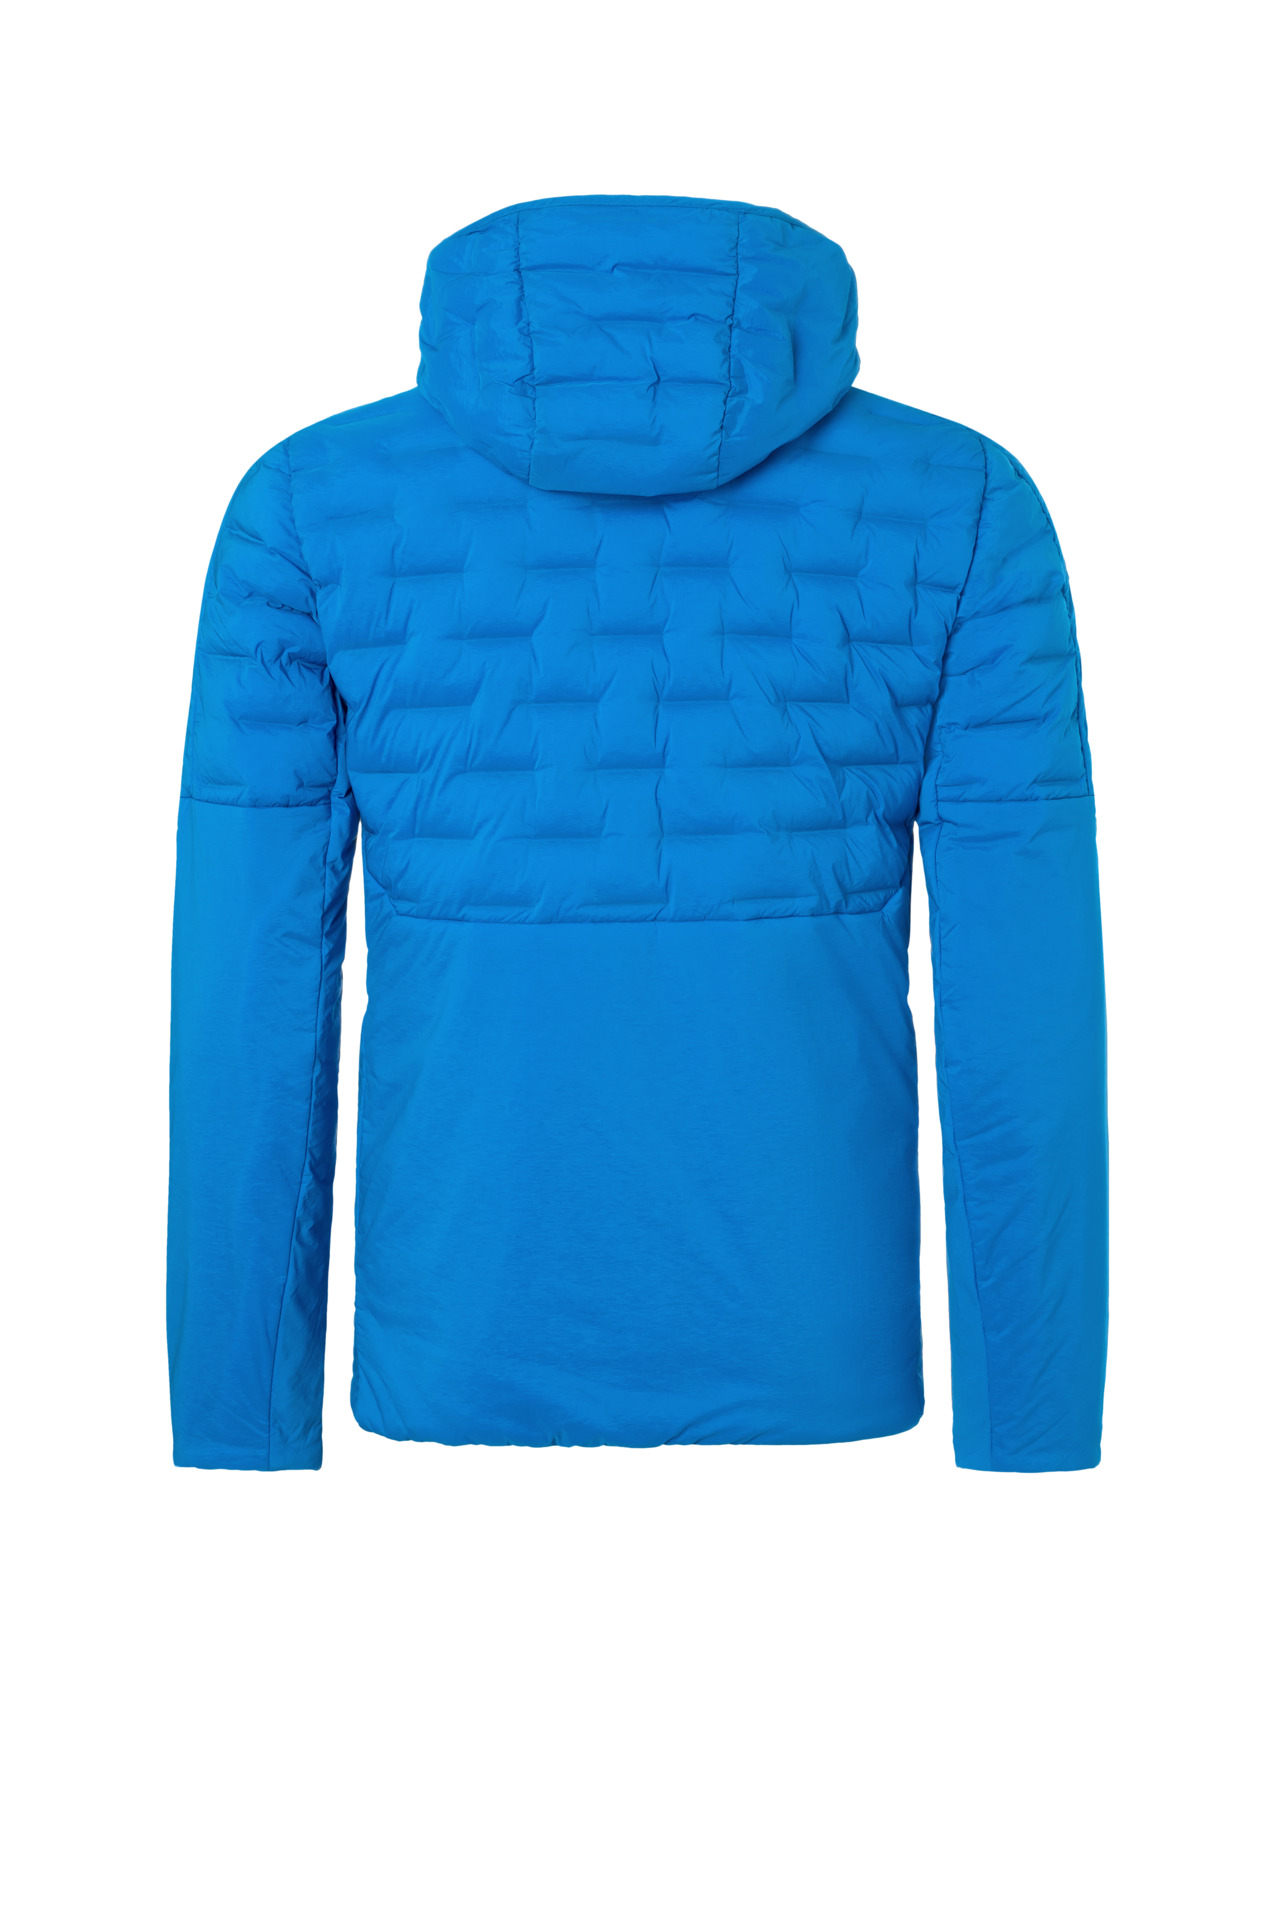 Kjus Men's Blackcomb Hooded Insulation Jacket - Aspen Ski Shop Hamilton ...